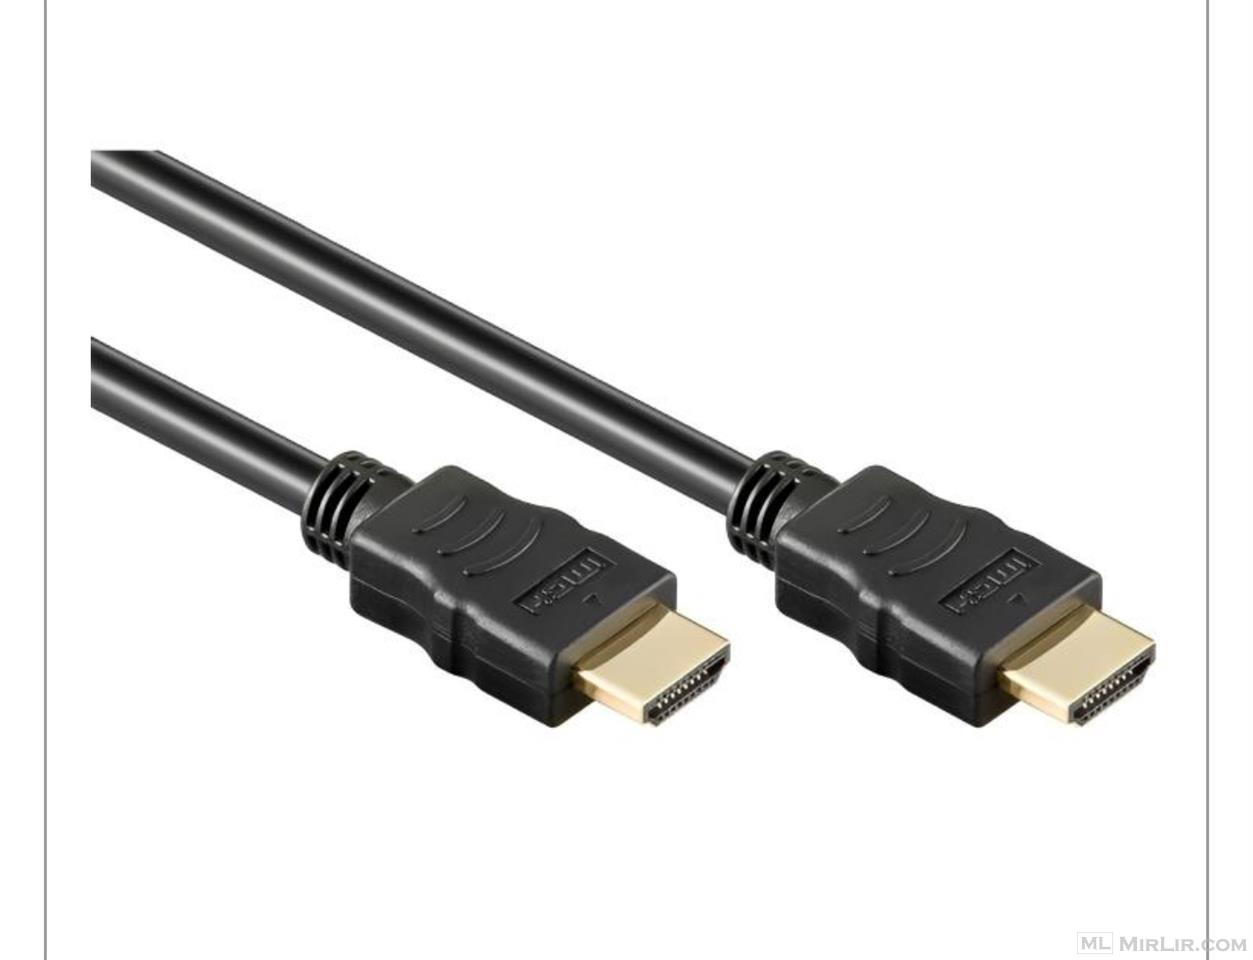 Cable VGA & HDMI